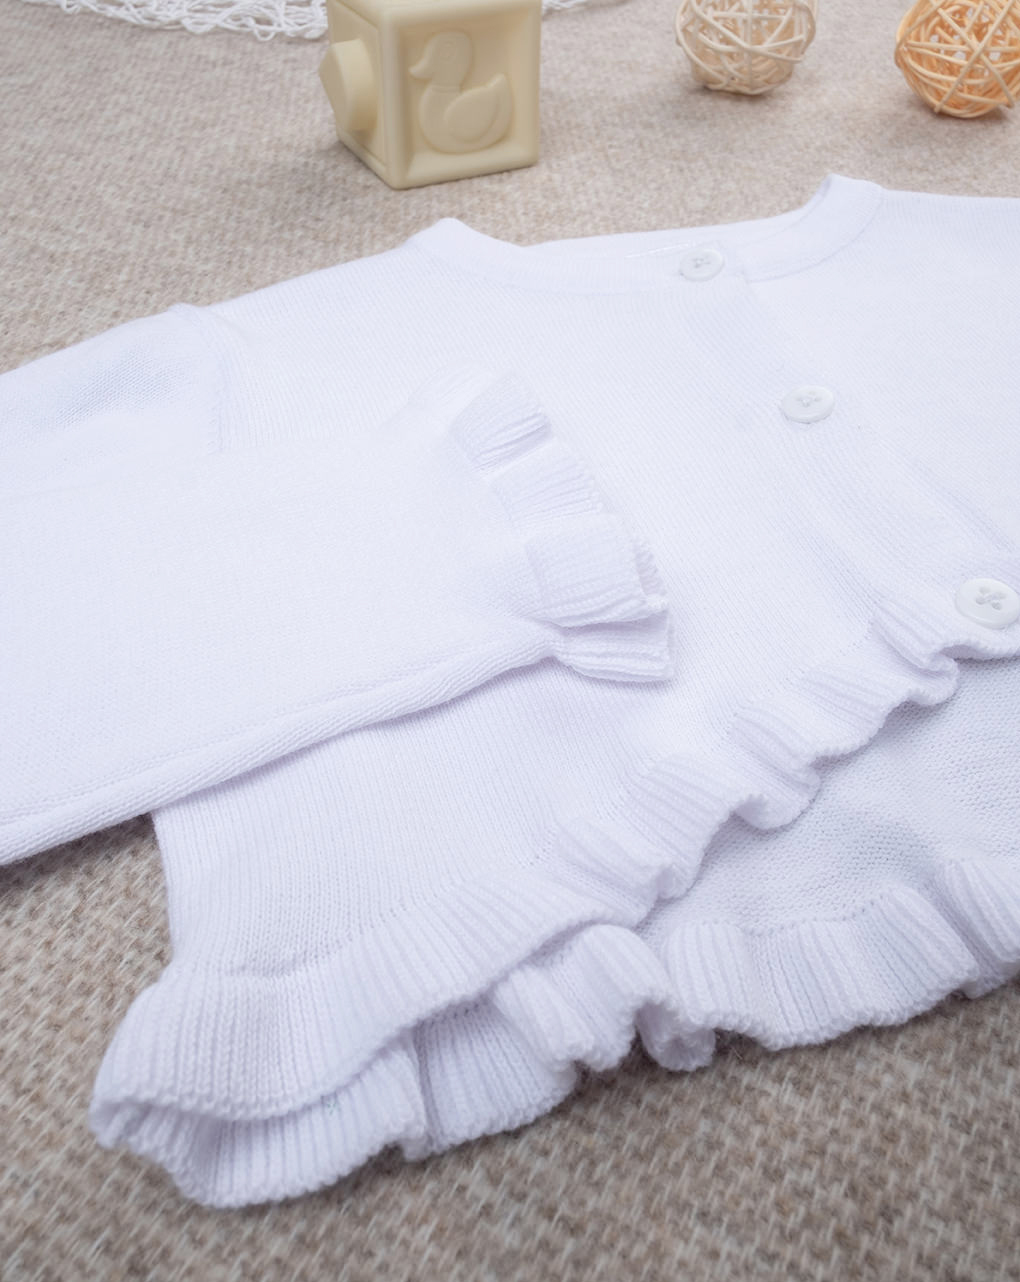 Cardigan bianco in tricot bambina - Prénatal